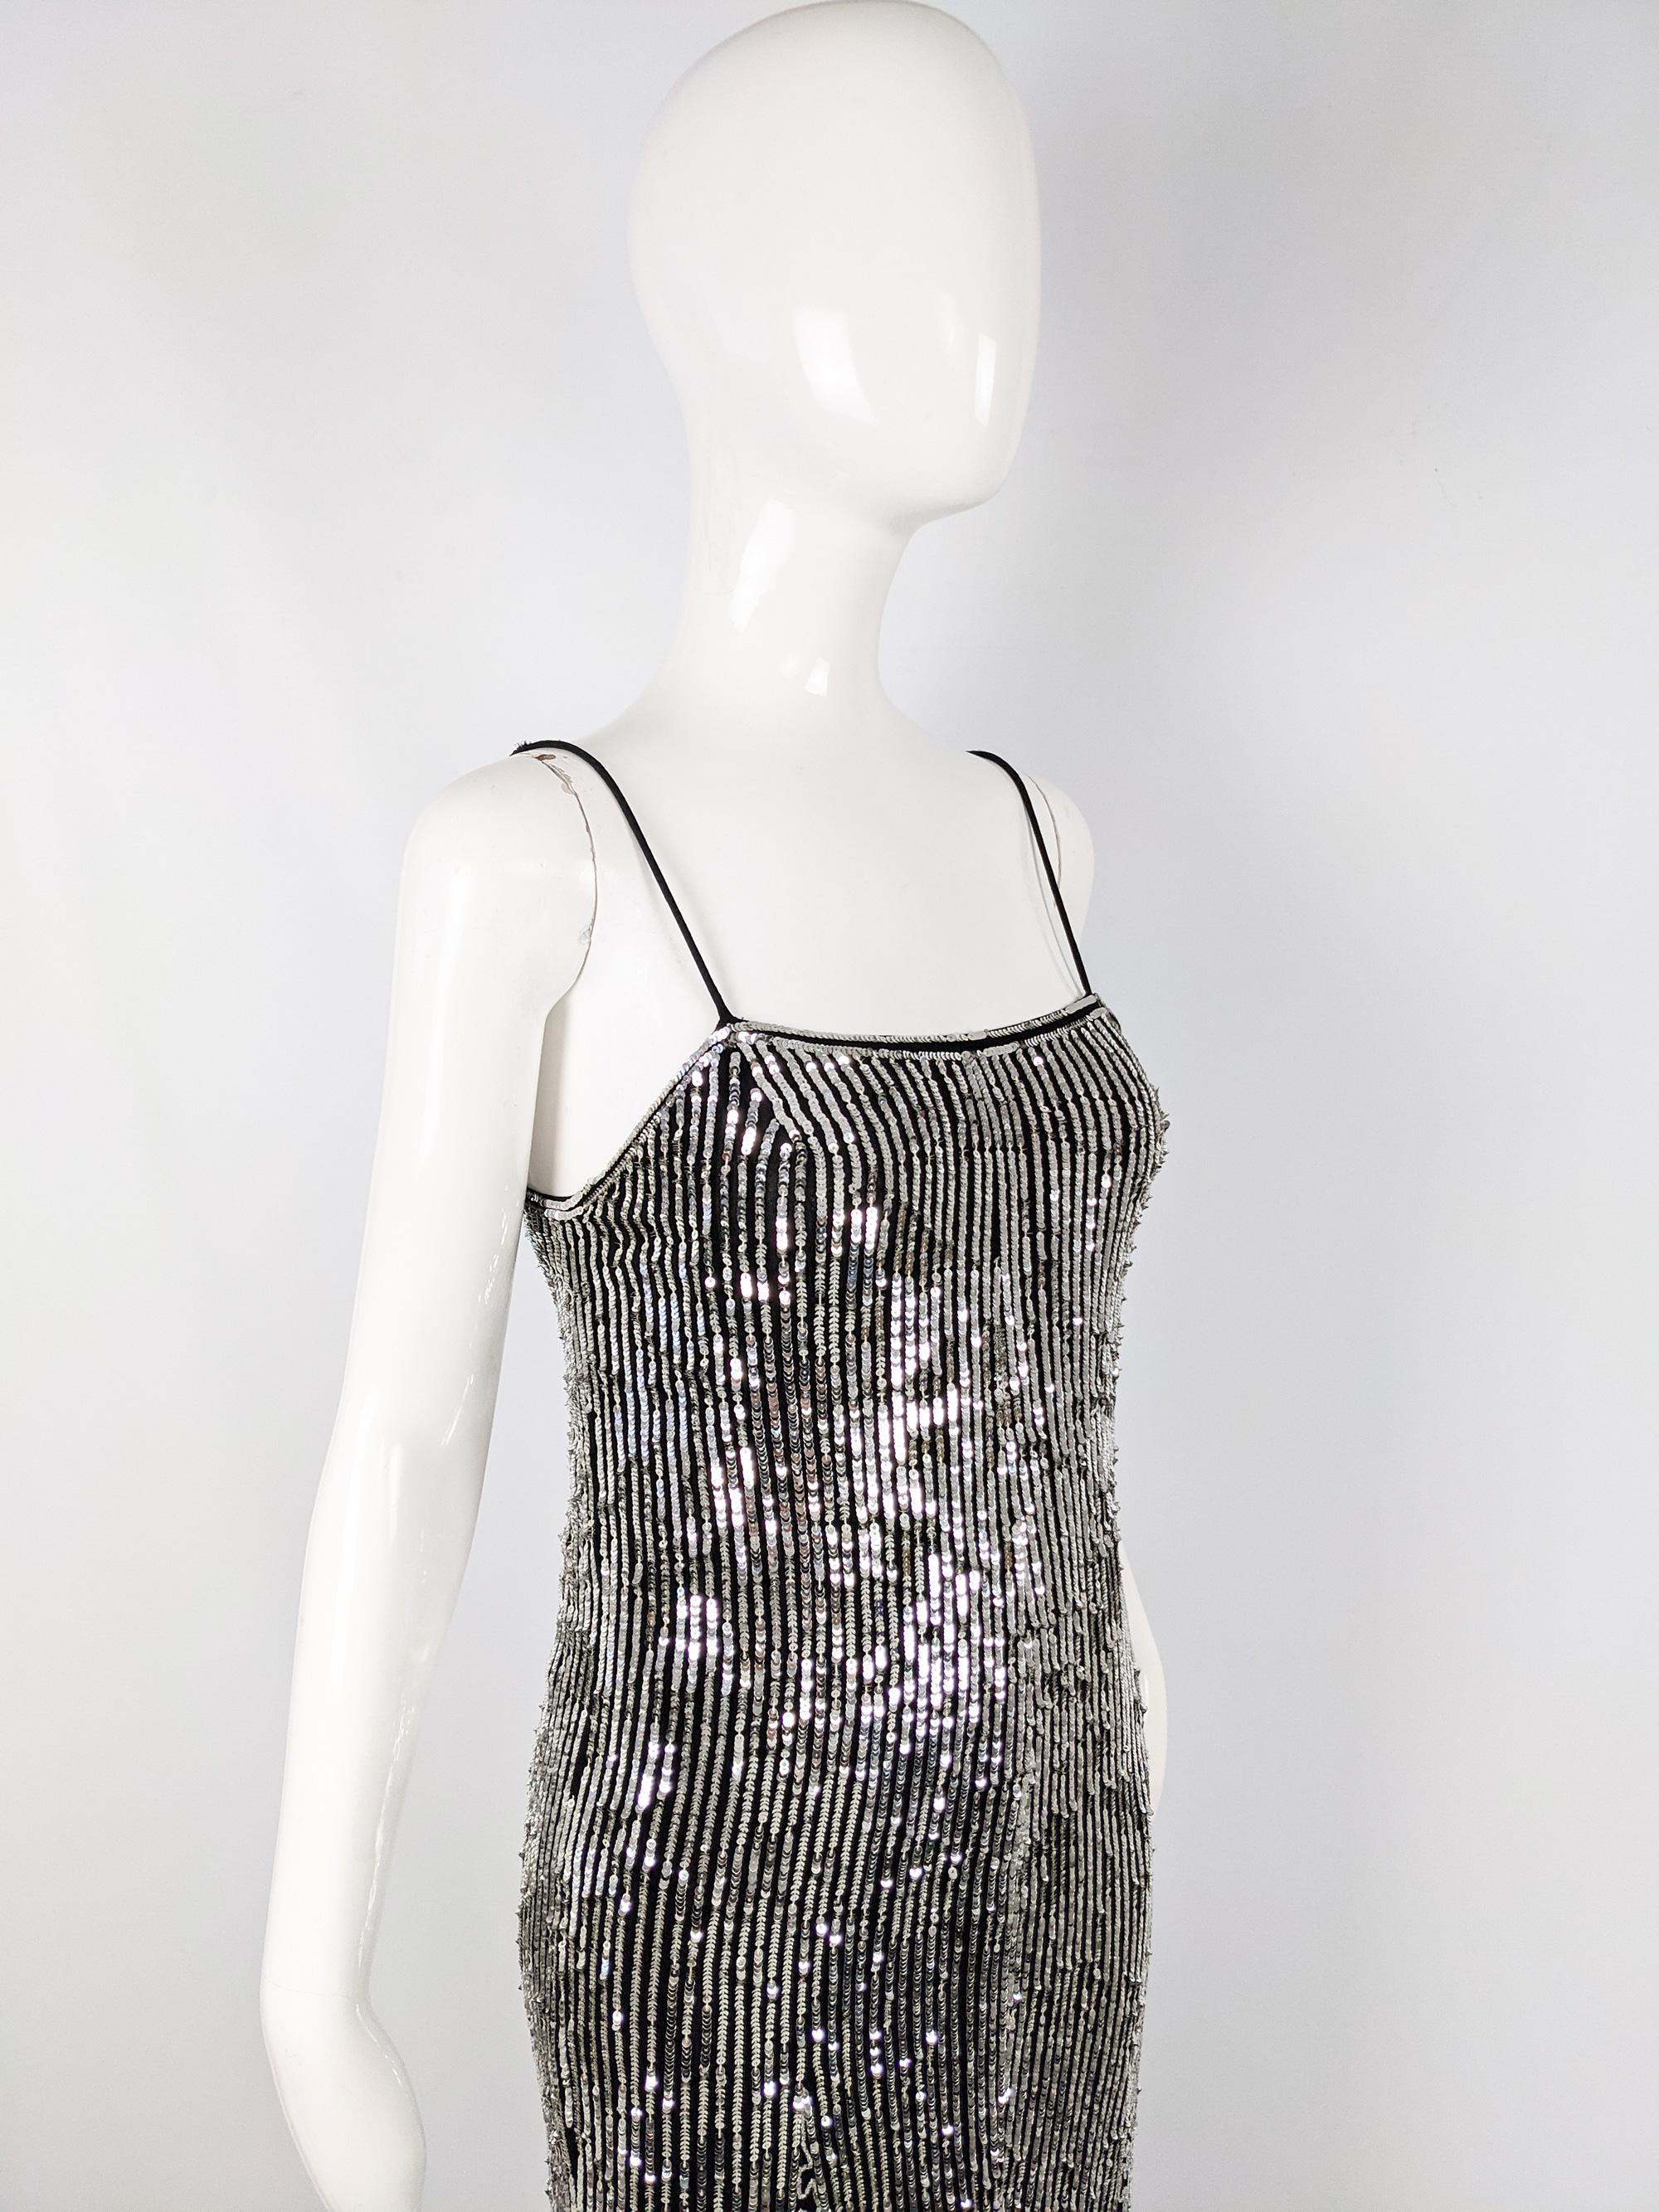 Eavis & Brown Vintage Black & Silver Sleeveless Flapper Style Party Dress 1